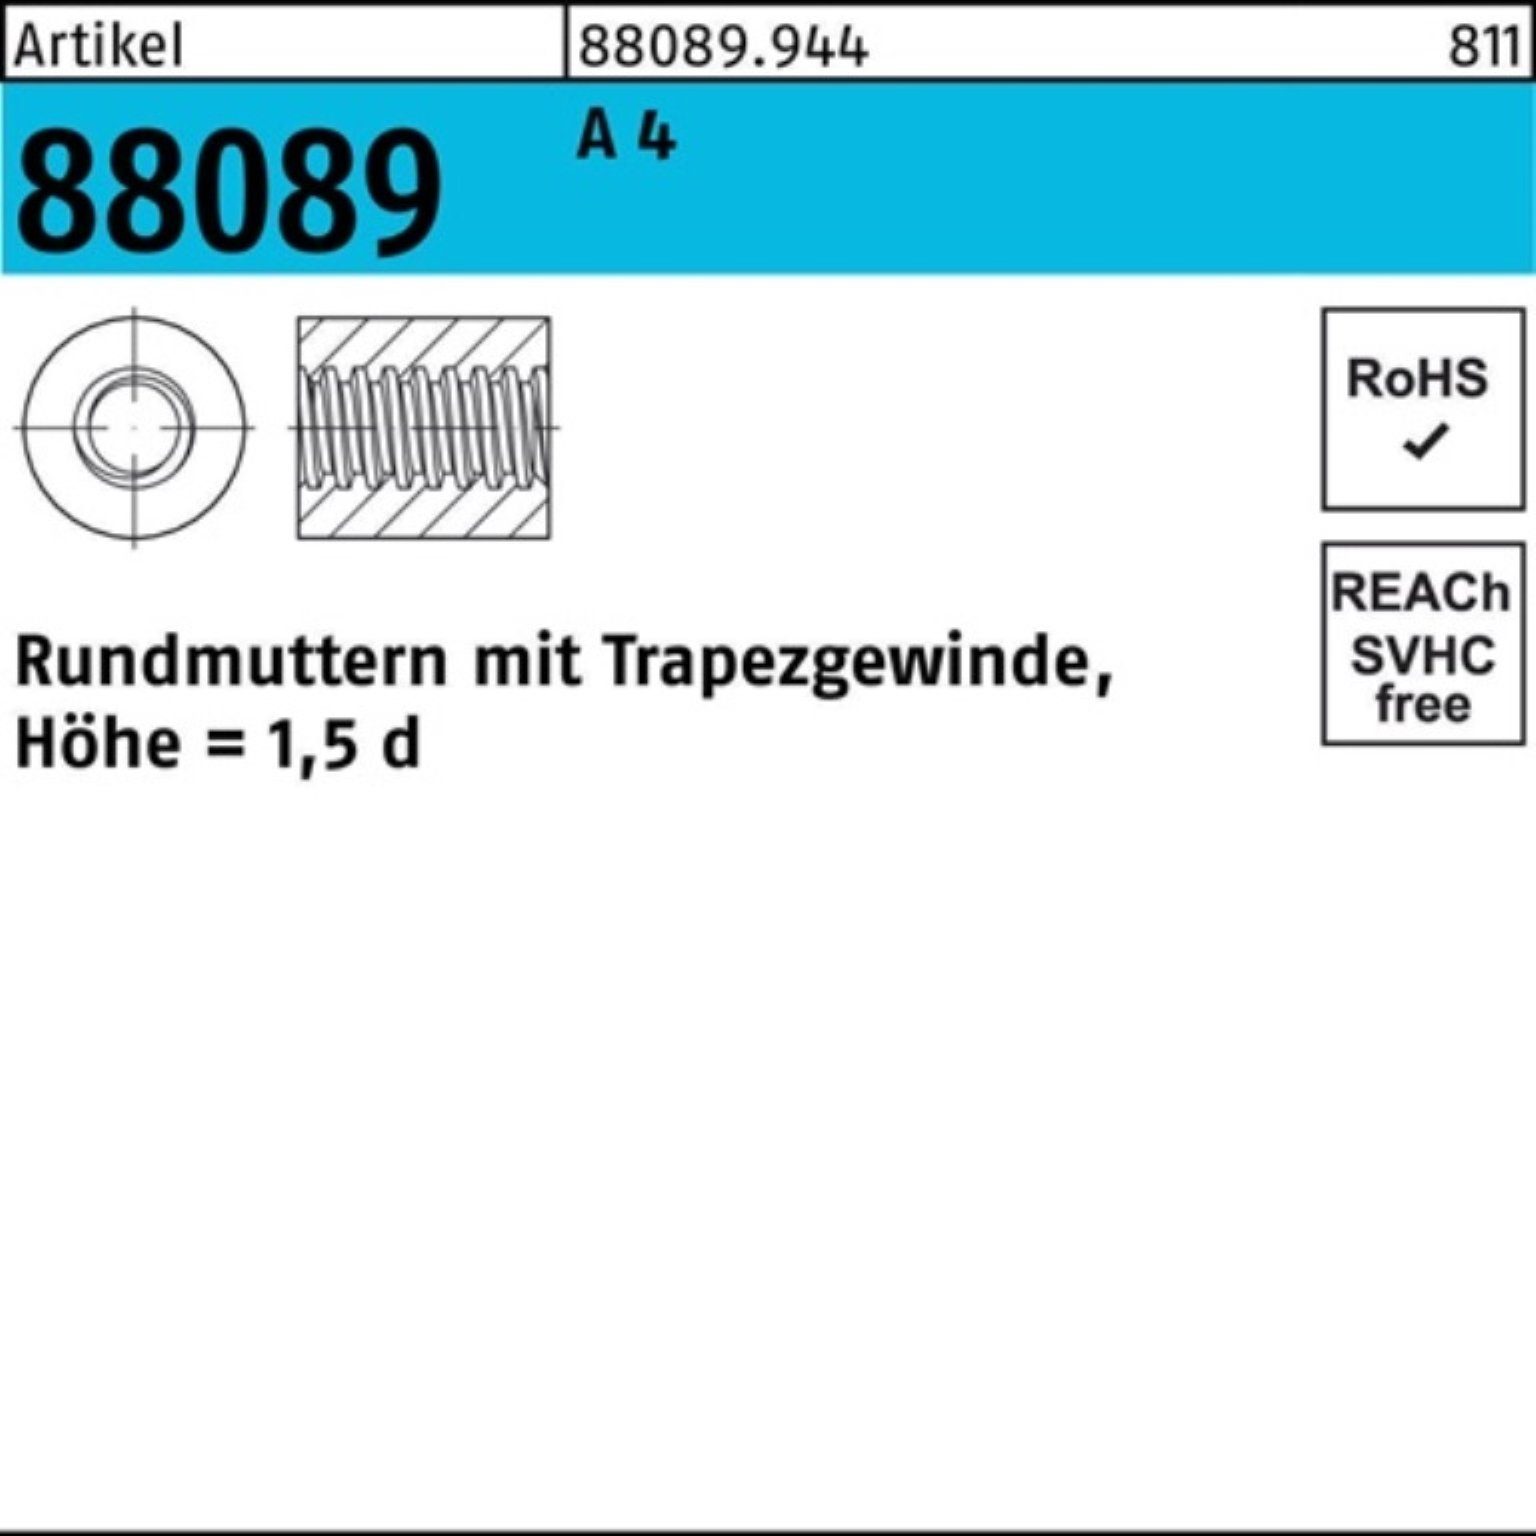 Rundmutter 88089 R Höhe=1,5 Pack Reyher 4 4 Trapezgewinde A TR 16x -36 100er Rundmutter